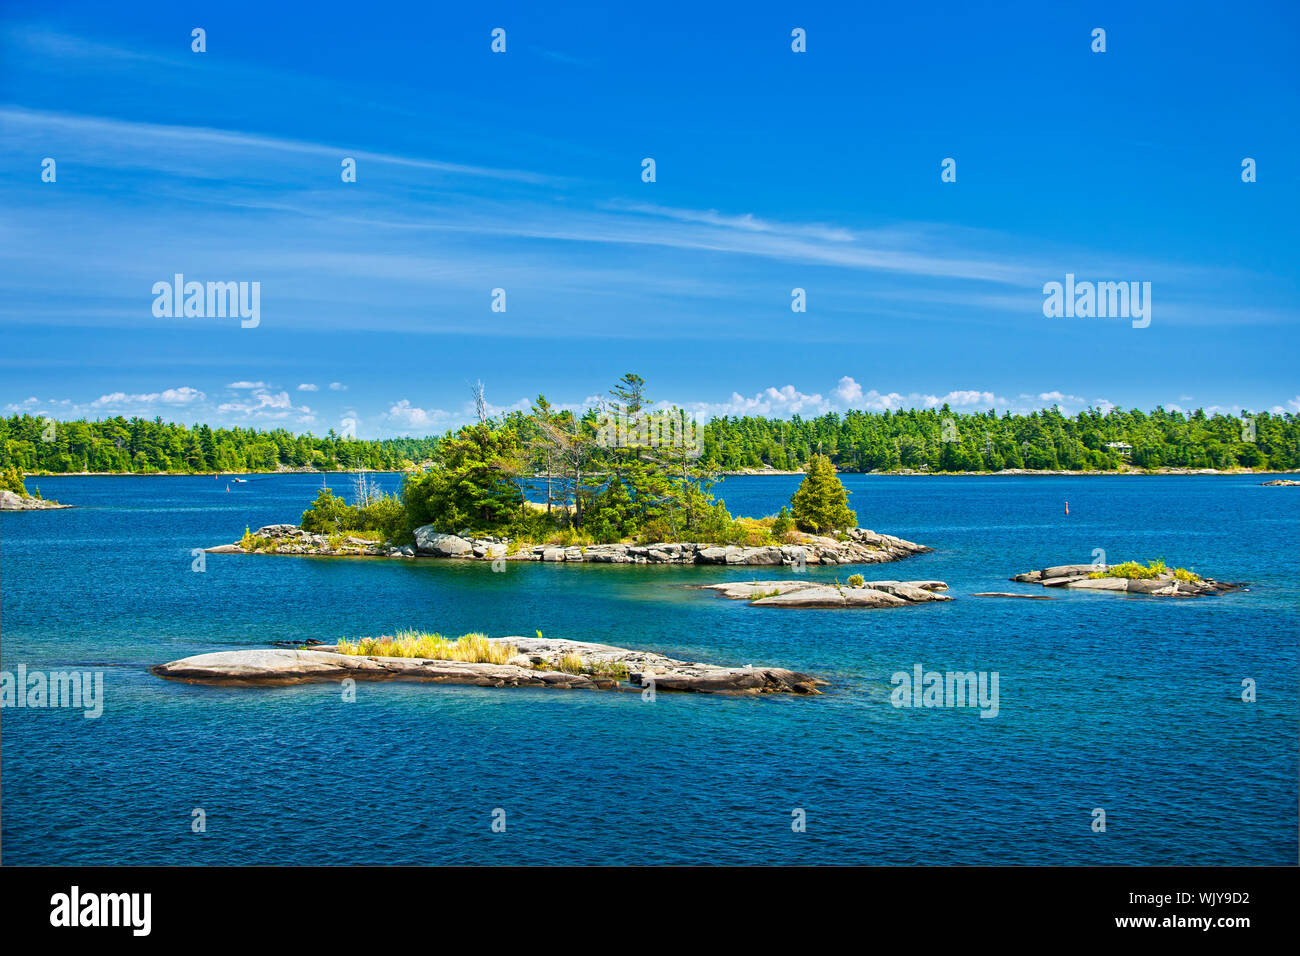 Small rocky islands in Georgian Bay near Parry Sound, Ontario Canada Stock Photo